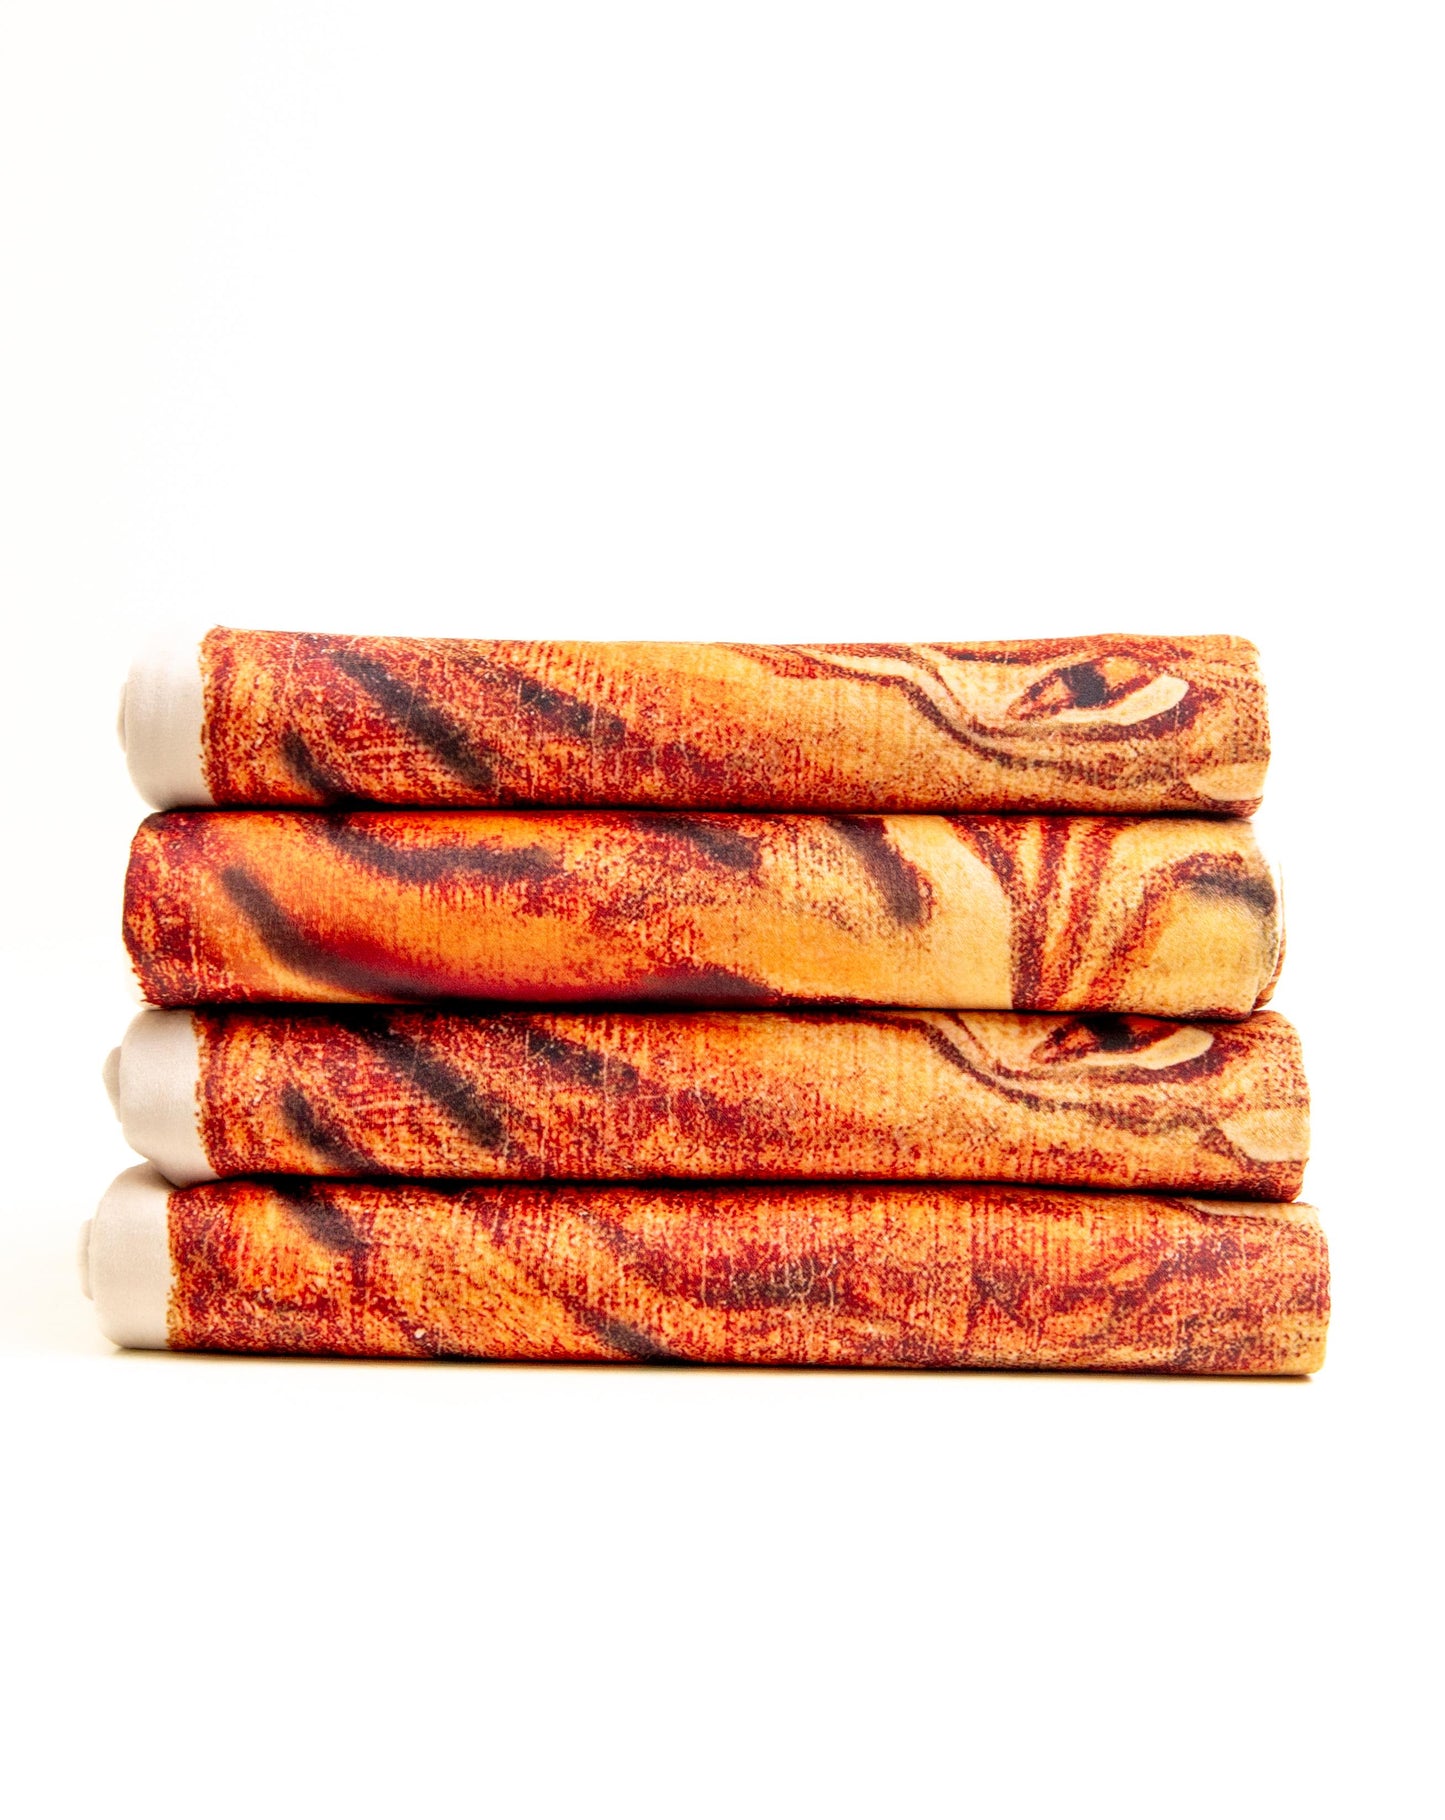 Tiger Print Beach Towel